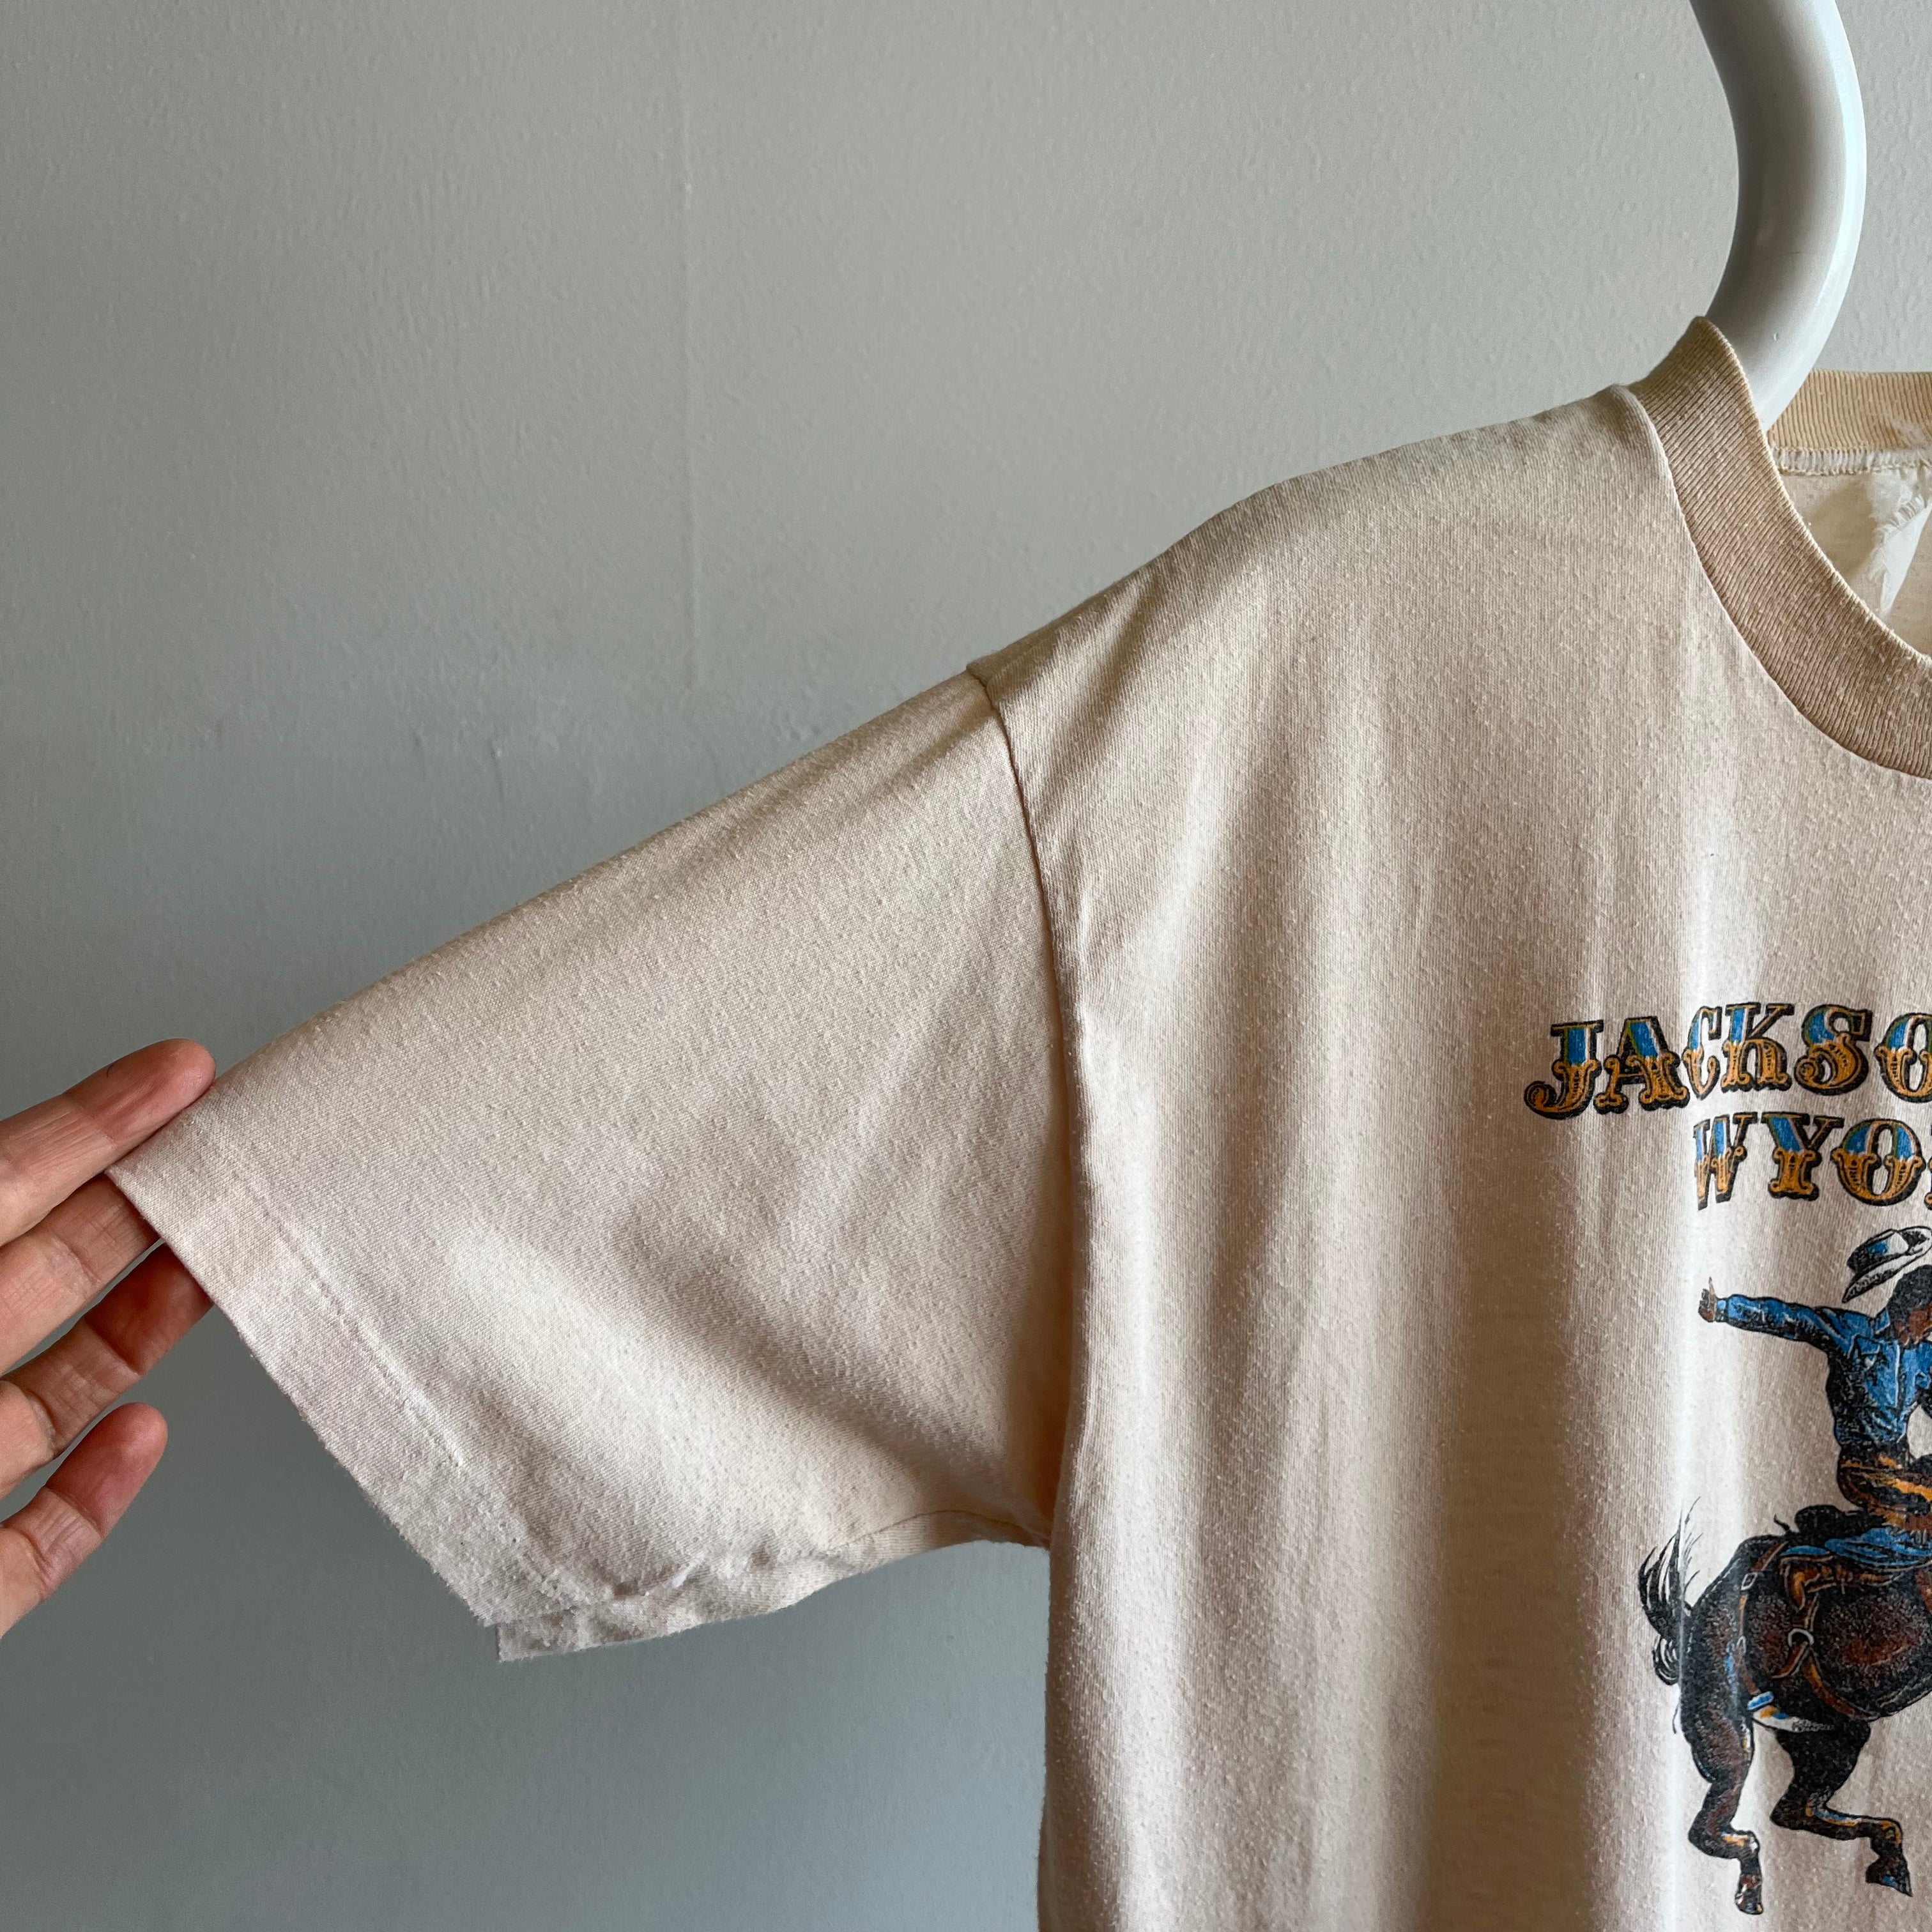 1970/80s Jackson Hole, Wyoming Epic Bucking Bronco T-Shirt - SWOOOON